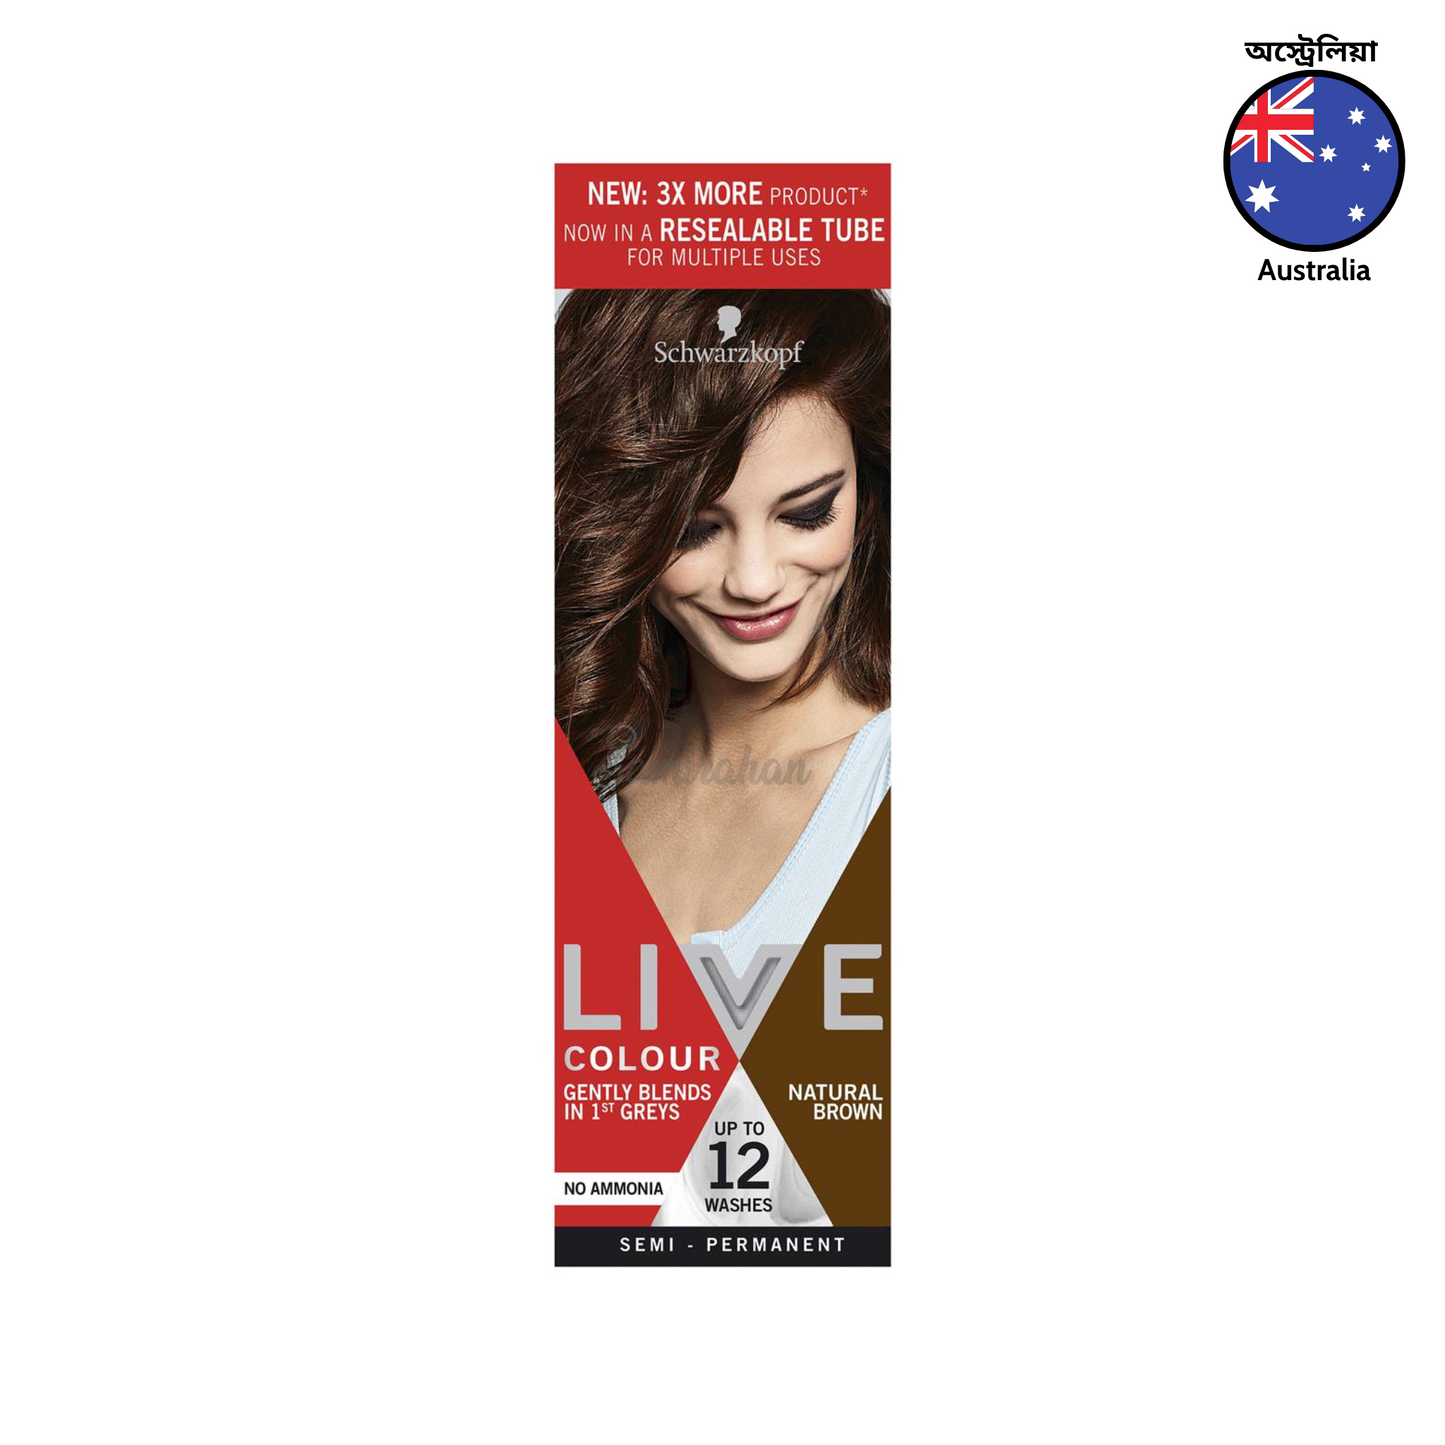 Schwarzkopf Live Colour Semi-Permanent Hair Colour Natural Brown 1 Kit